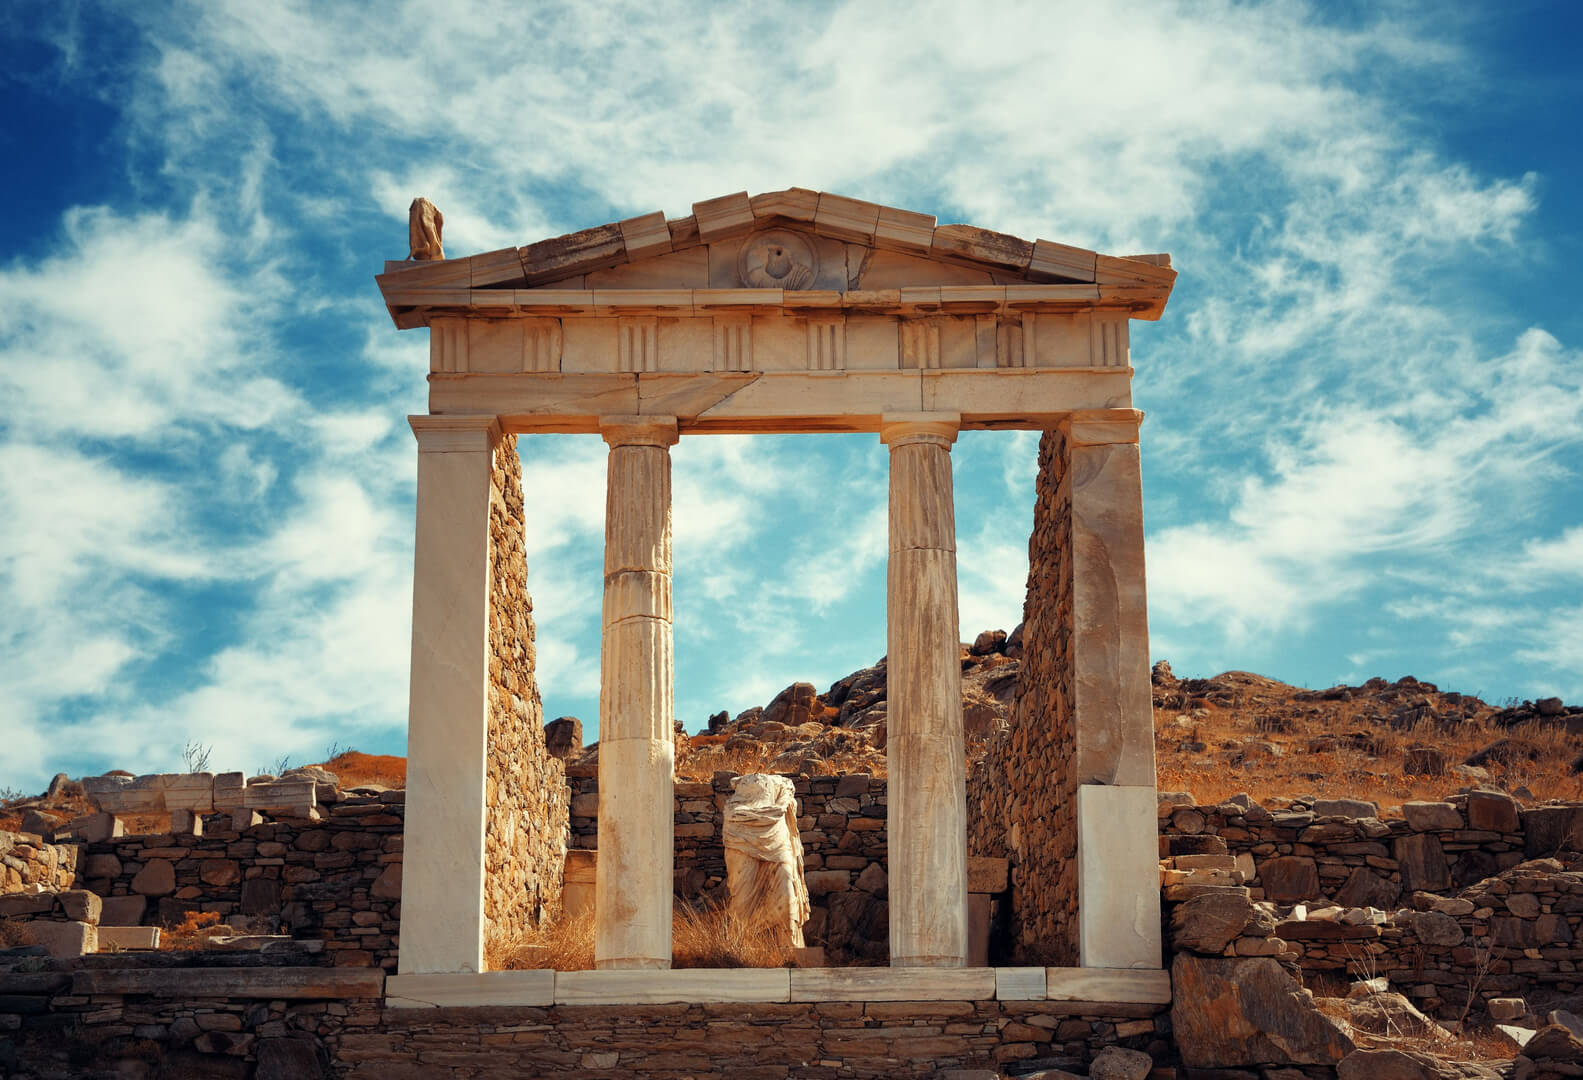 Temple in Historical Ruins in Delos Island near Mikonos, Greece.
